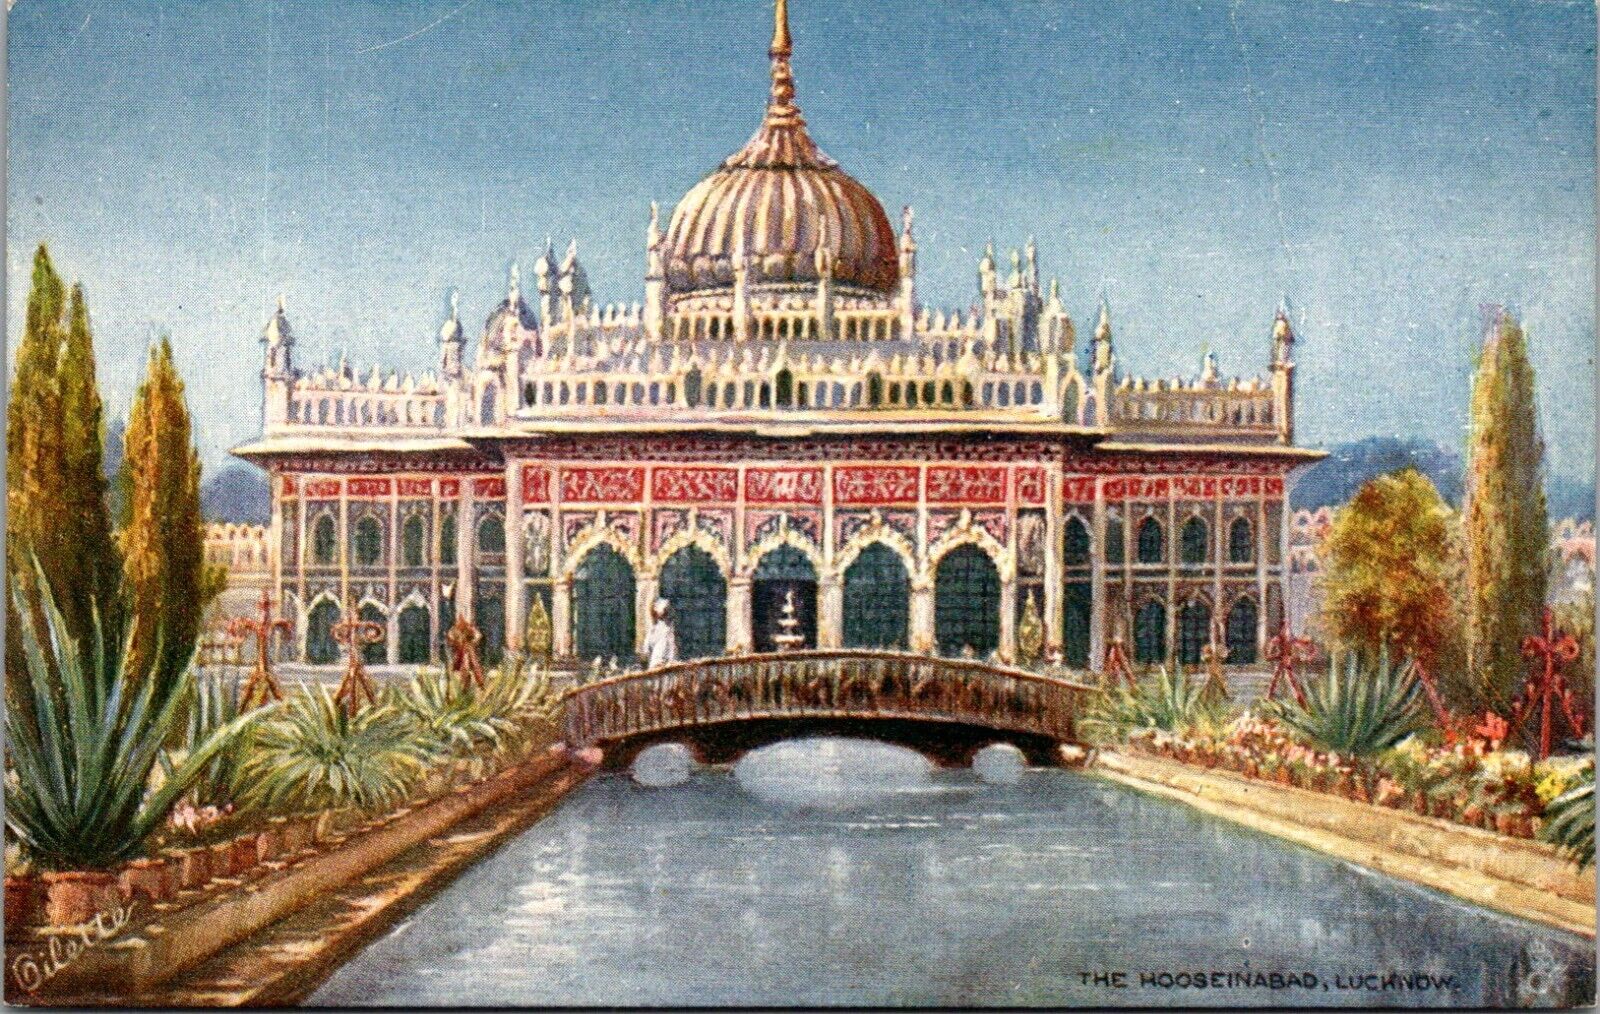 Tucks#7236 The Hoseeinabad Lucknow India Tomb of Muhammad Ali Shah Bridge Garden